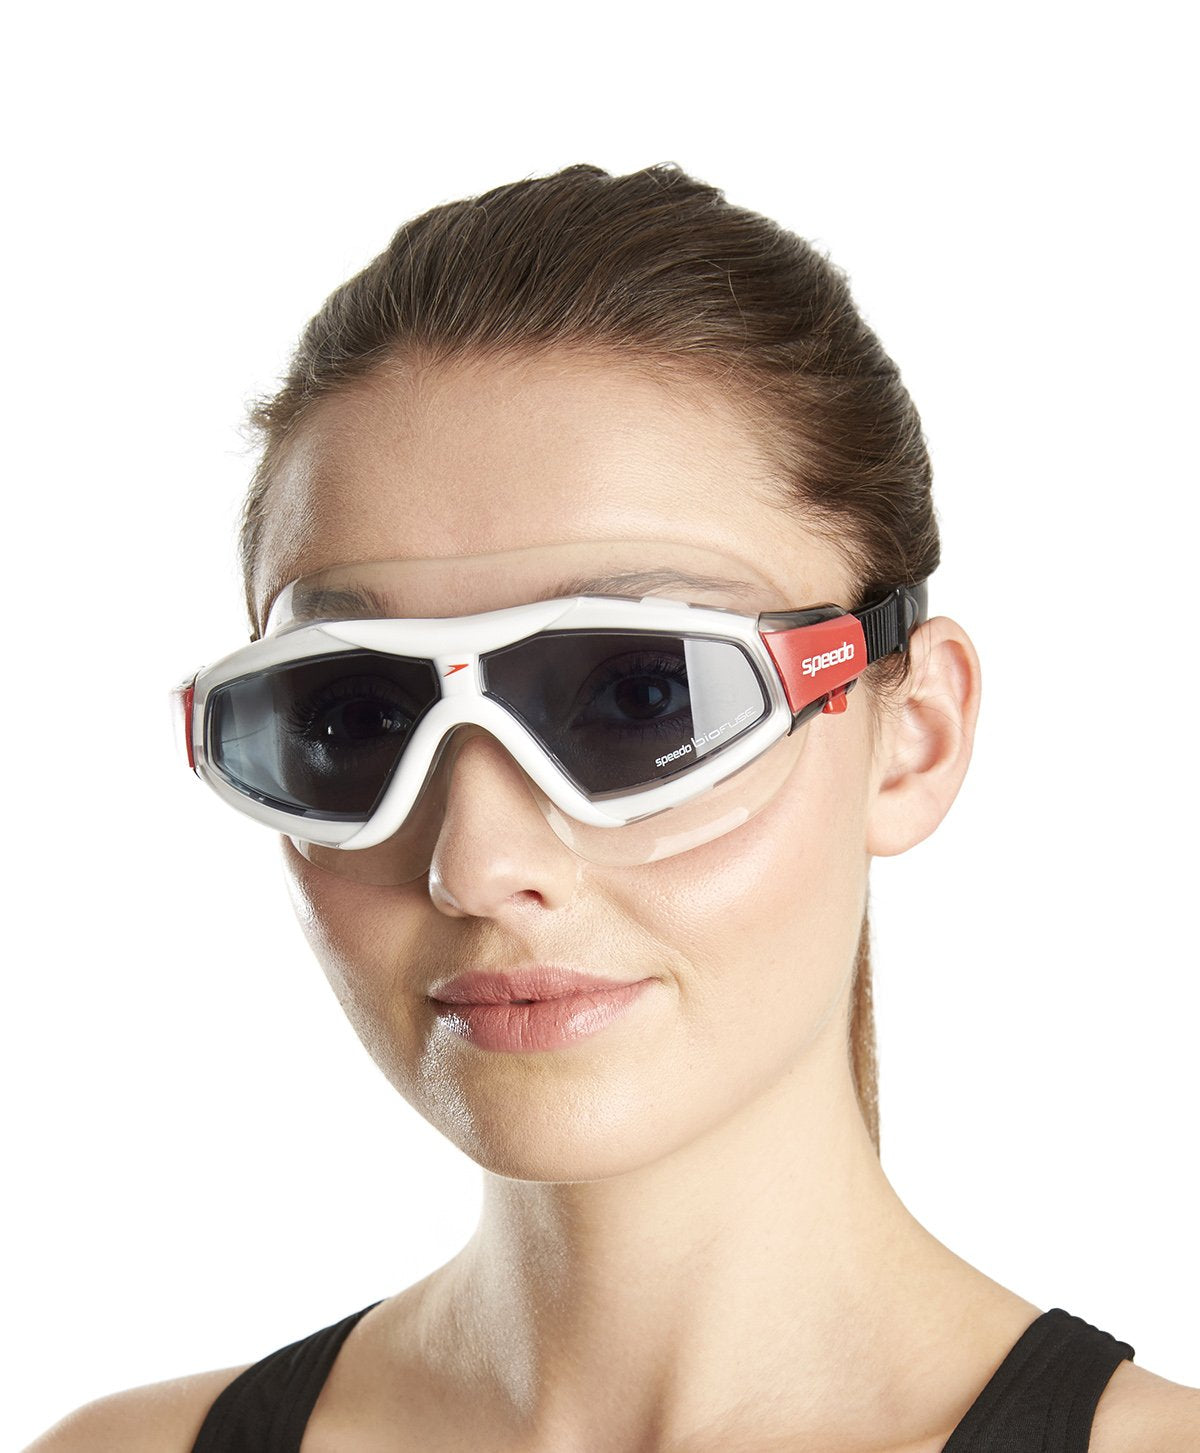 Speedo Unisex-Adult Rift Pro Mask Goggles (Red/Smoke) - Best Price online Prokicksports.com